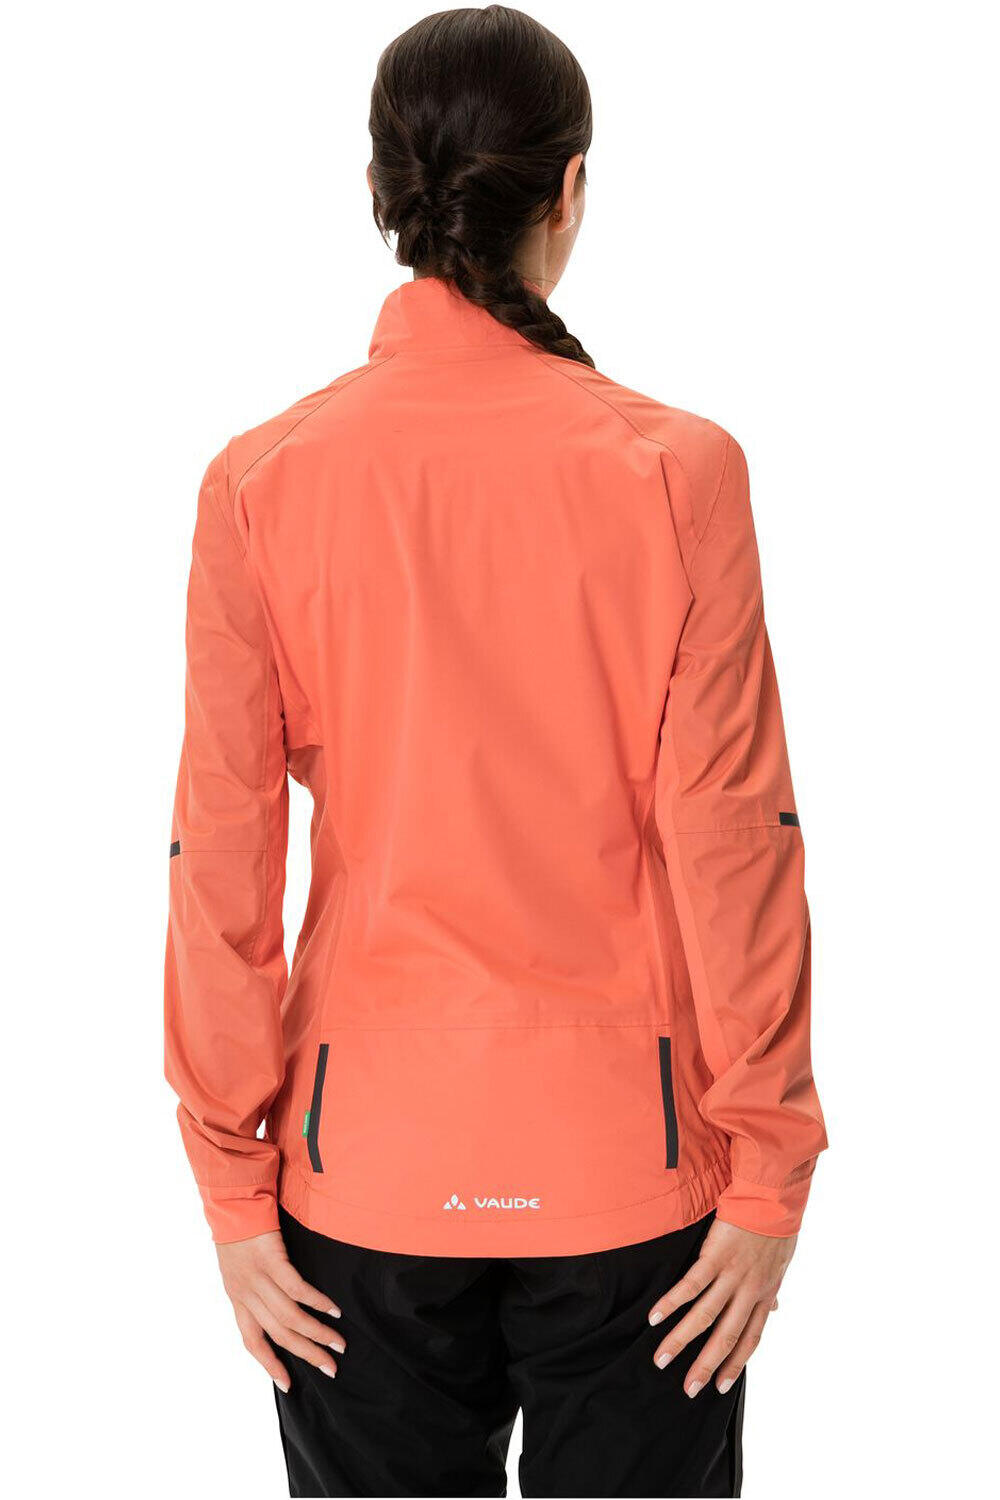 Vaude chaqueta impermeable ciclismo mujer Women's Kuro Rain Jacket vista trasera